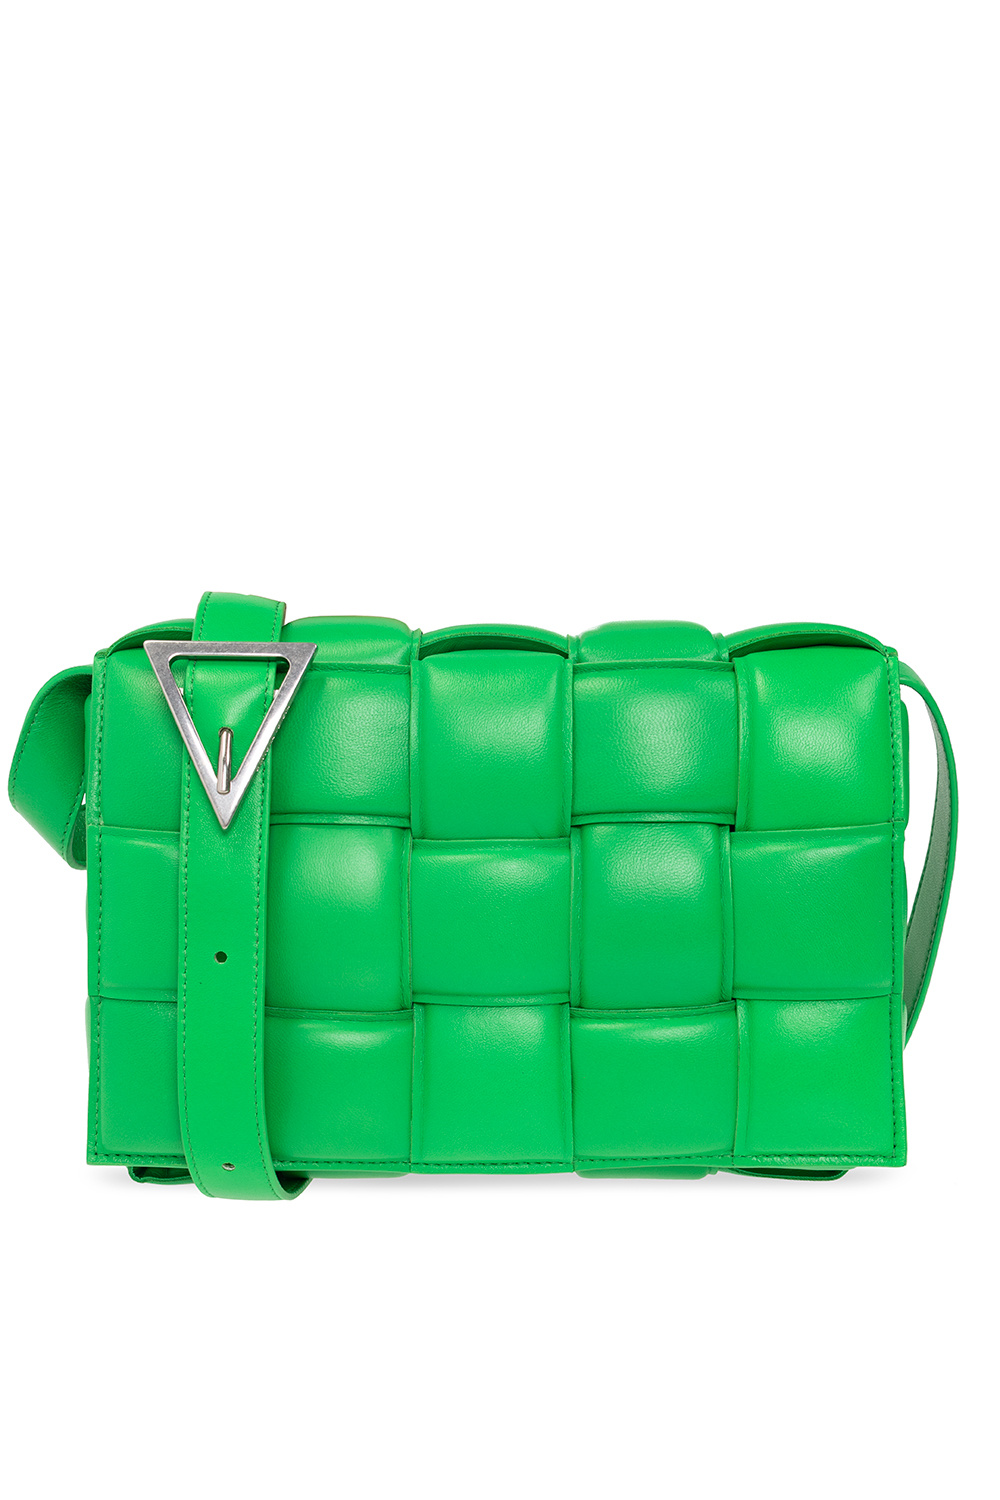 Bottega Veneta Marie Bag in Green